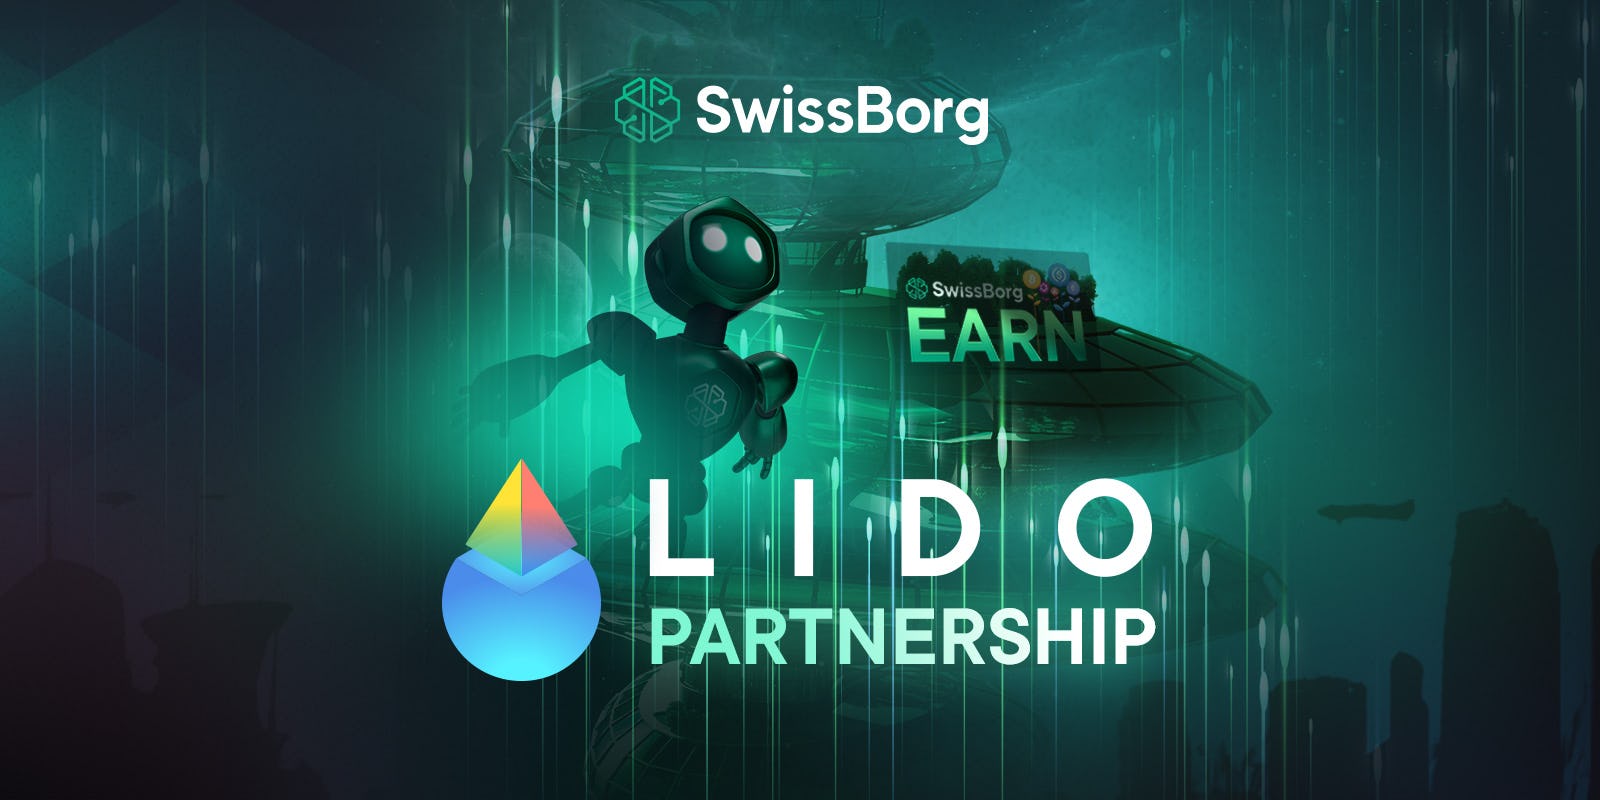 Lido Partnership